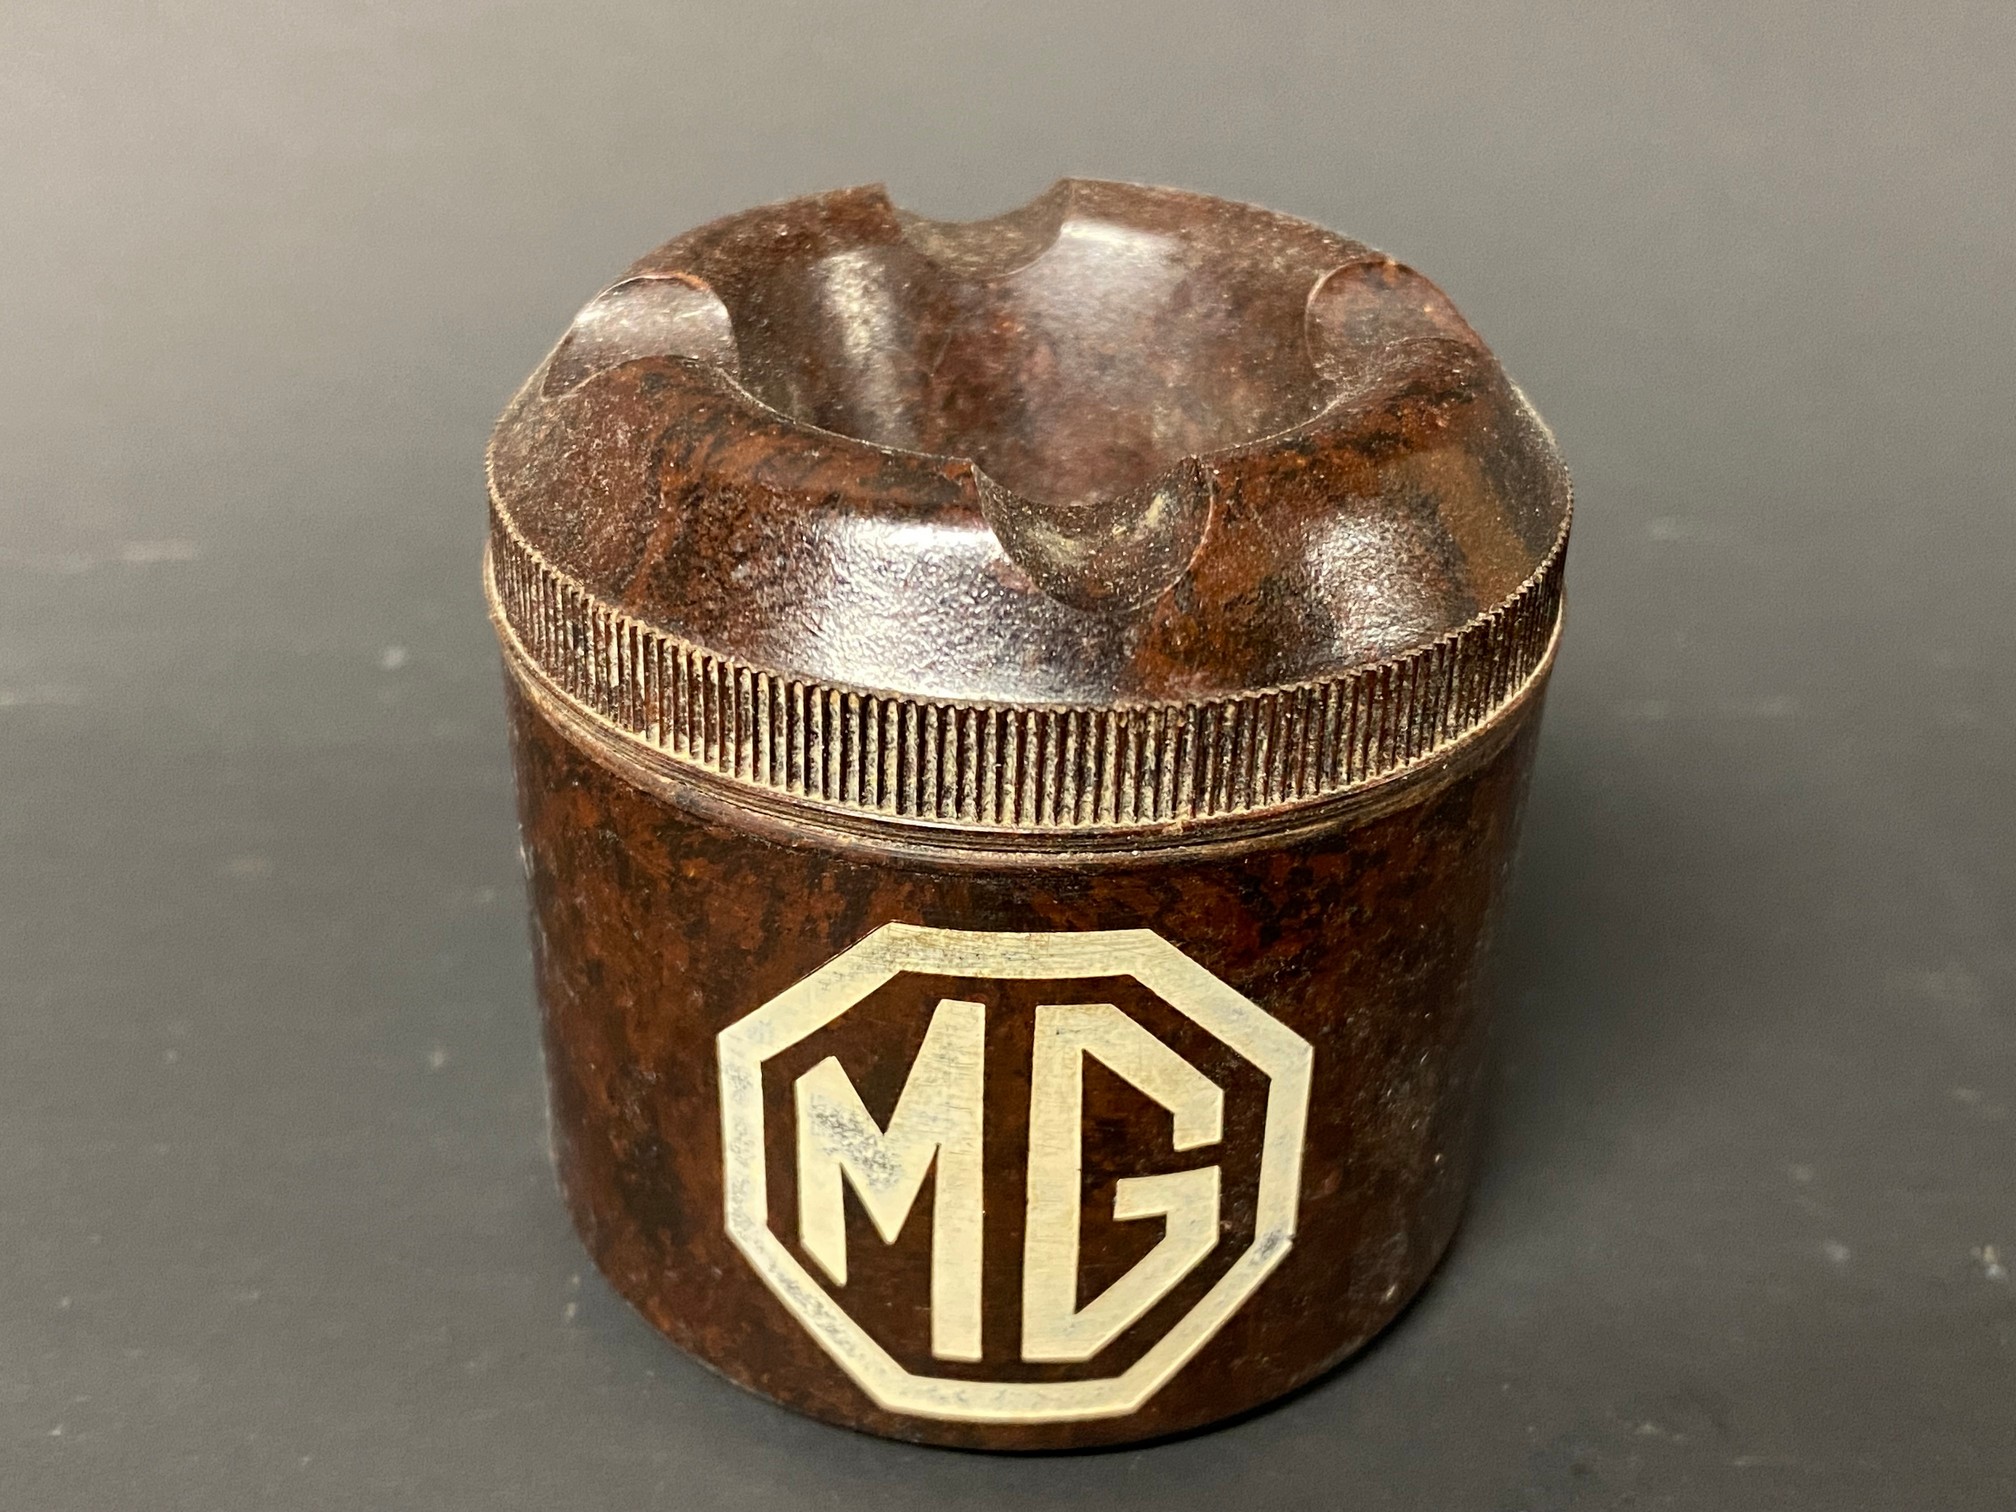 A bakelite MG branded ashtray.